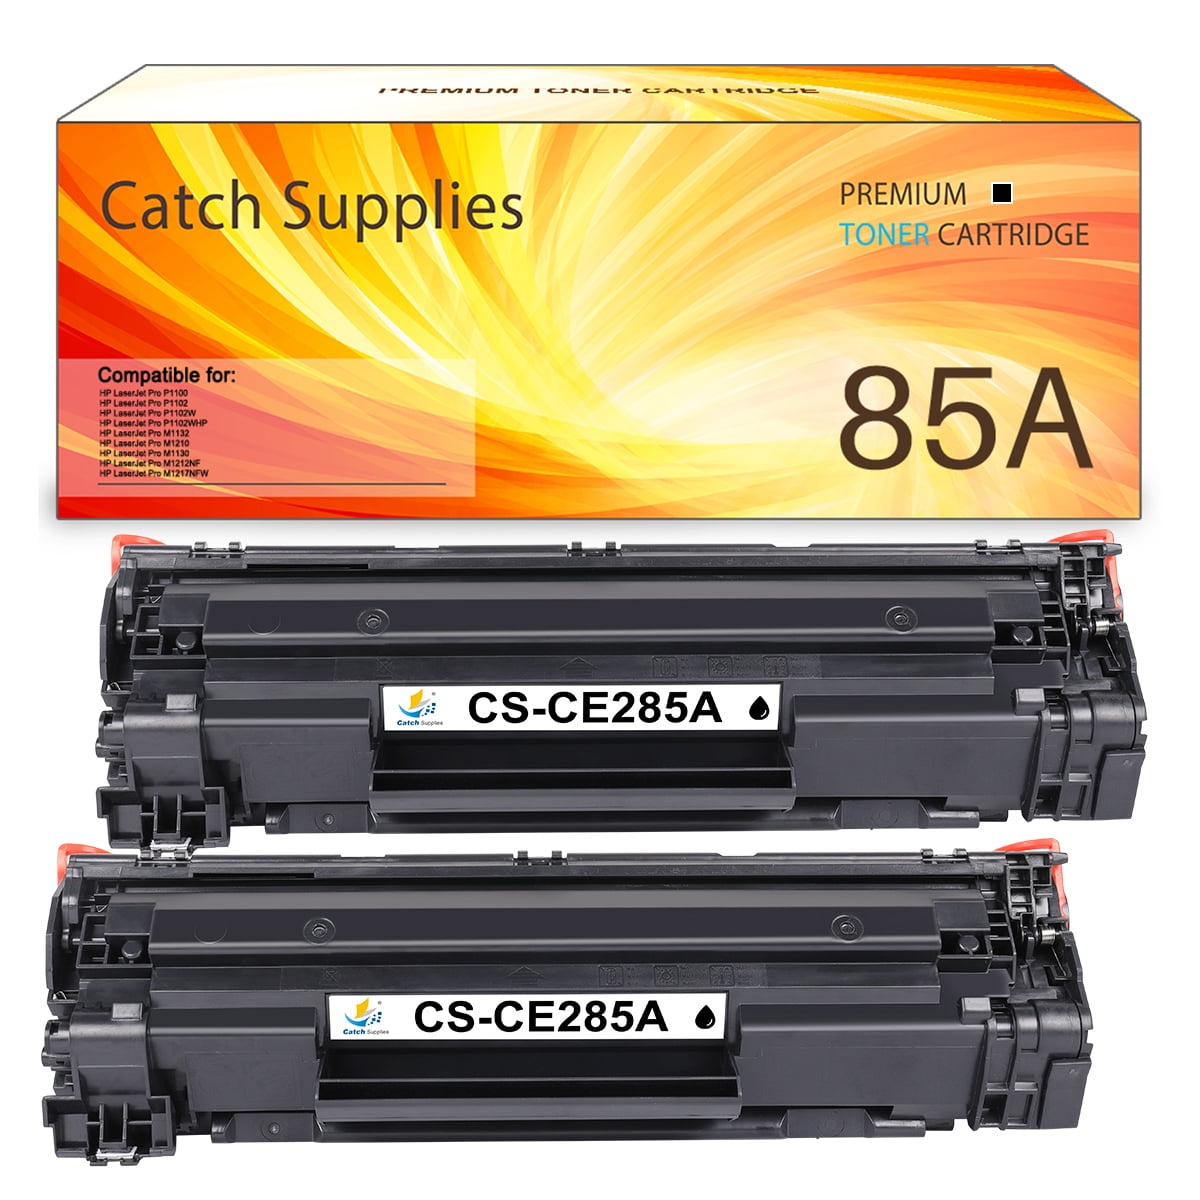 Catch Supplies 2-Pack Compatible Toner for CE285A HP 85A LaserJet Pro P1100 P1102 P1102W P1102WHP M1132 M1210 M1130 M1212 M1212NFW Printer Ink (Black) - Walmart.com